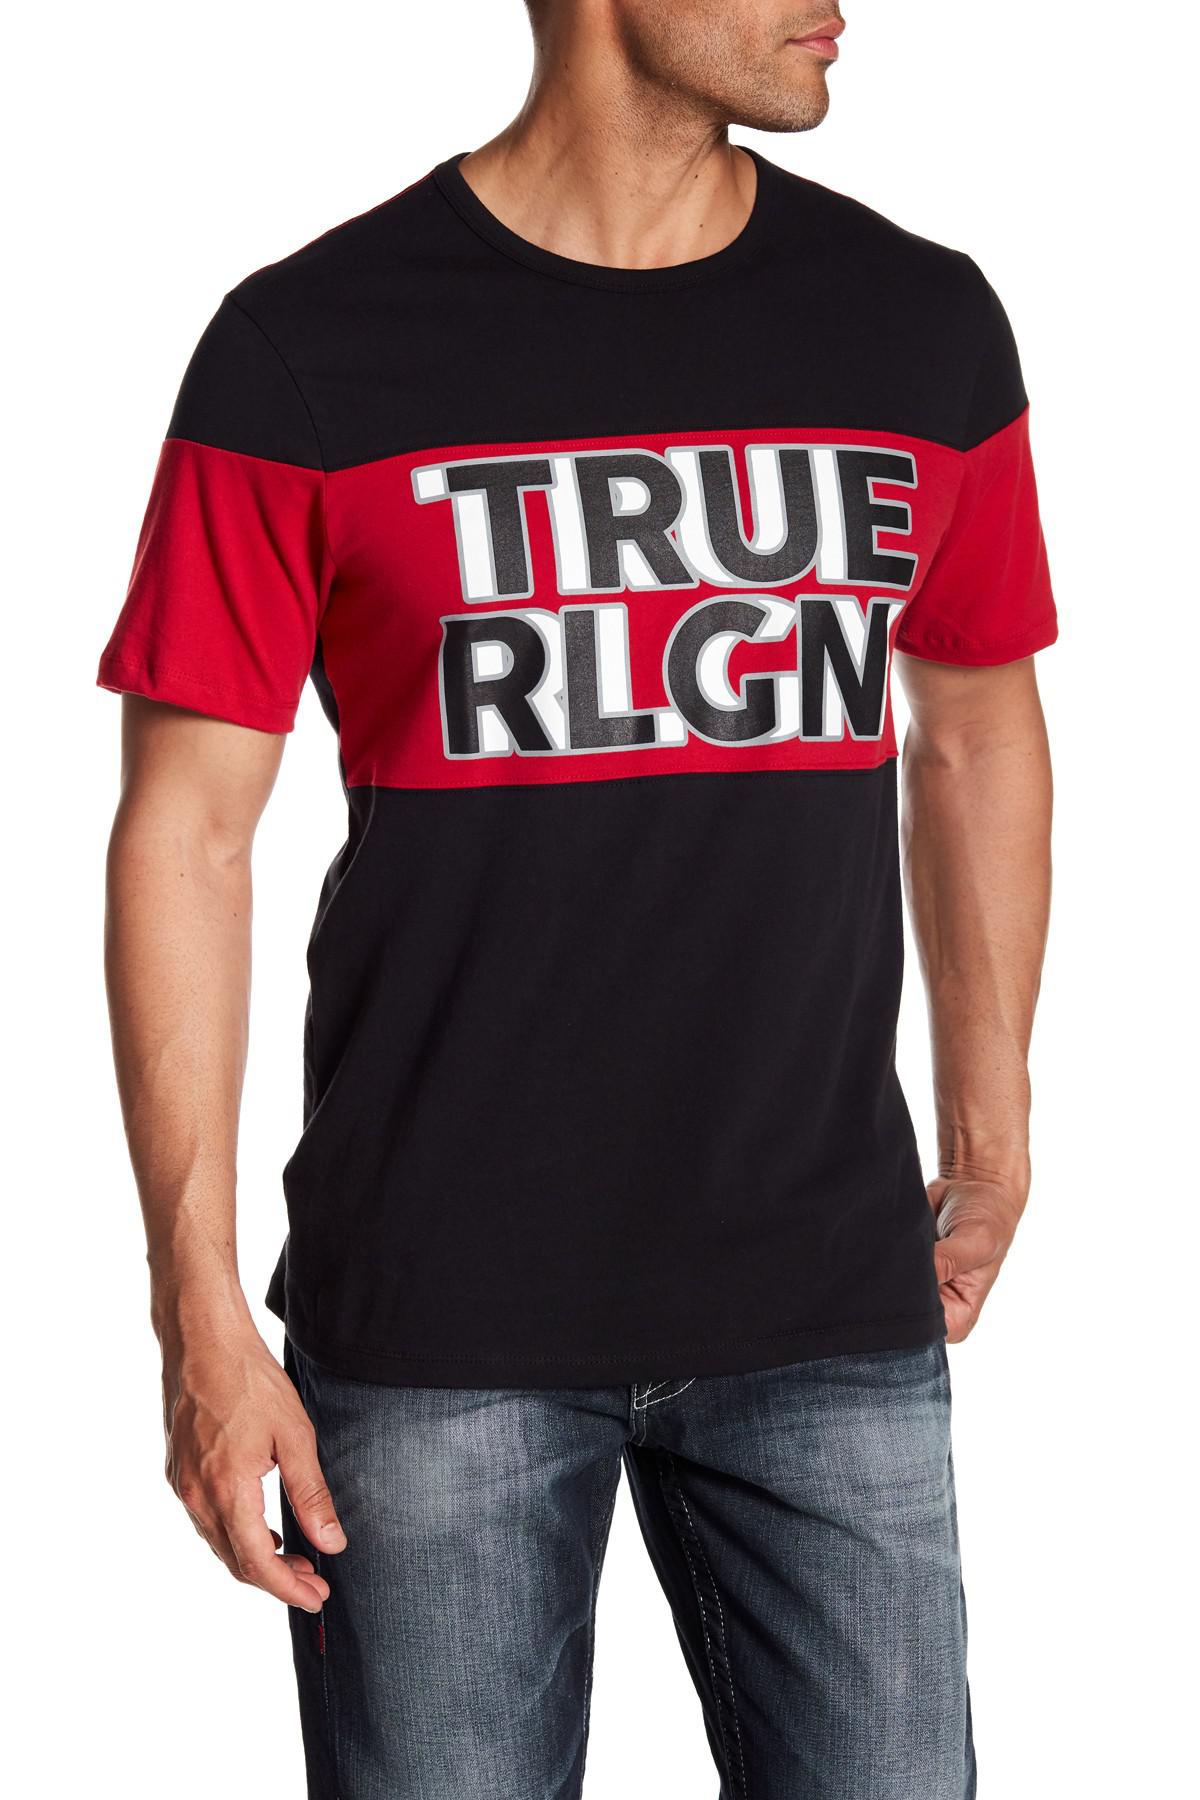 true religion black and red shirt